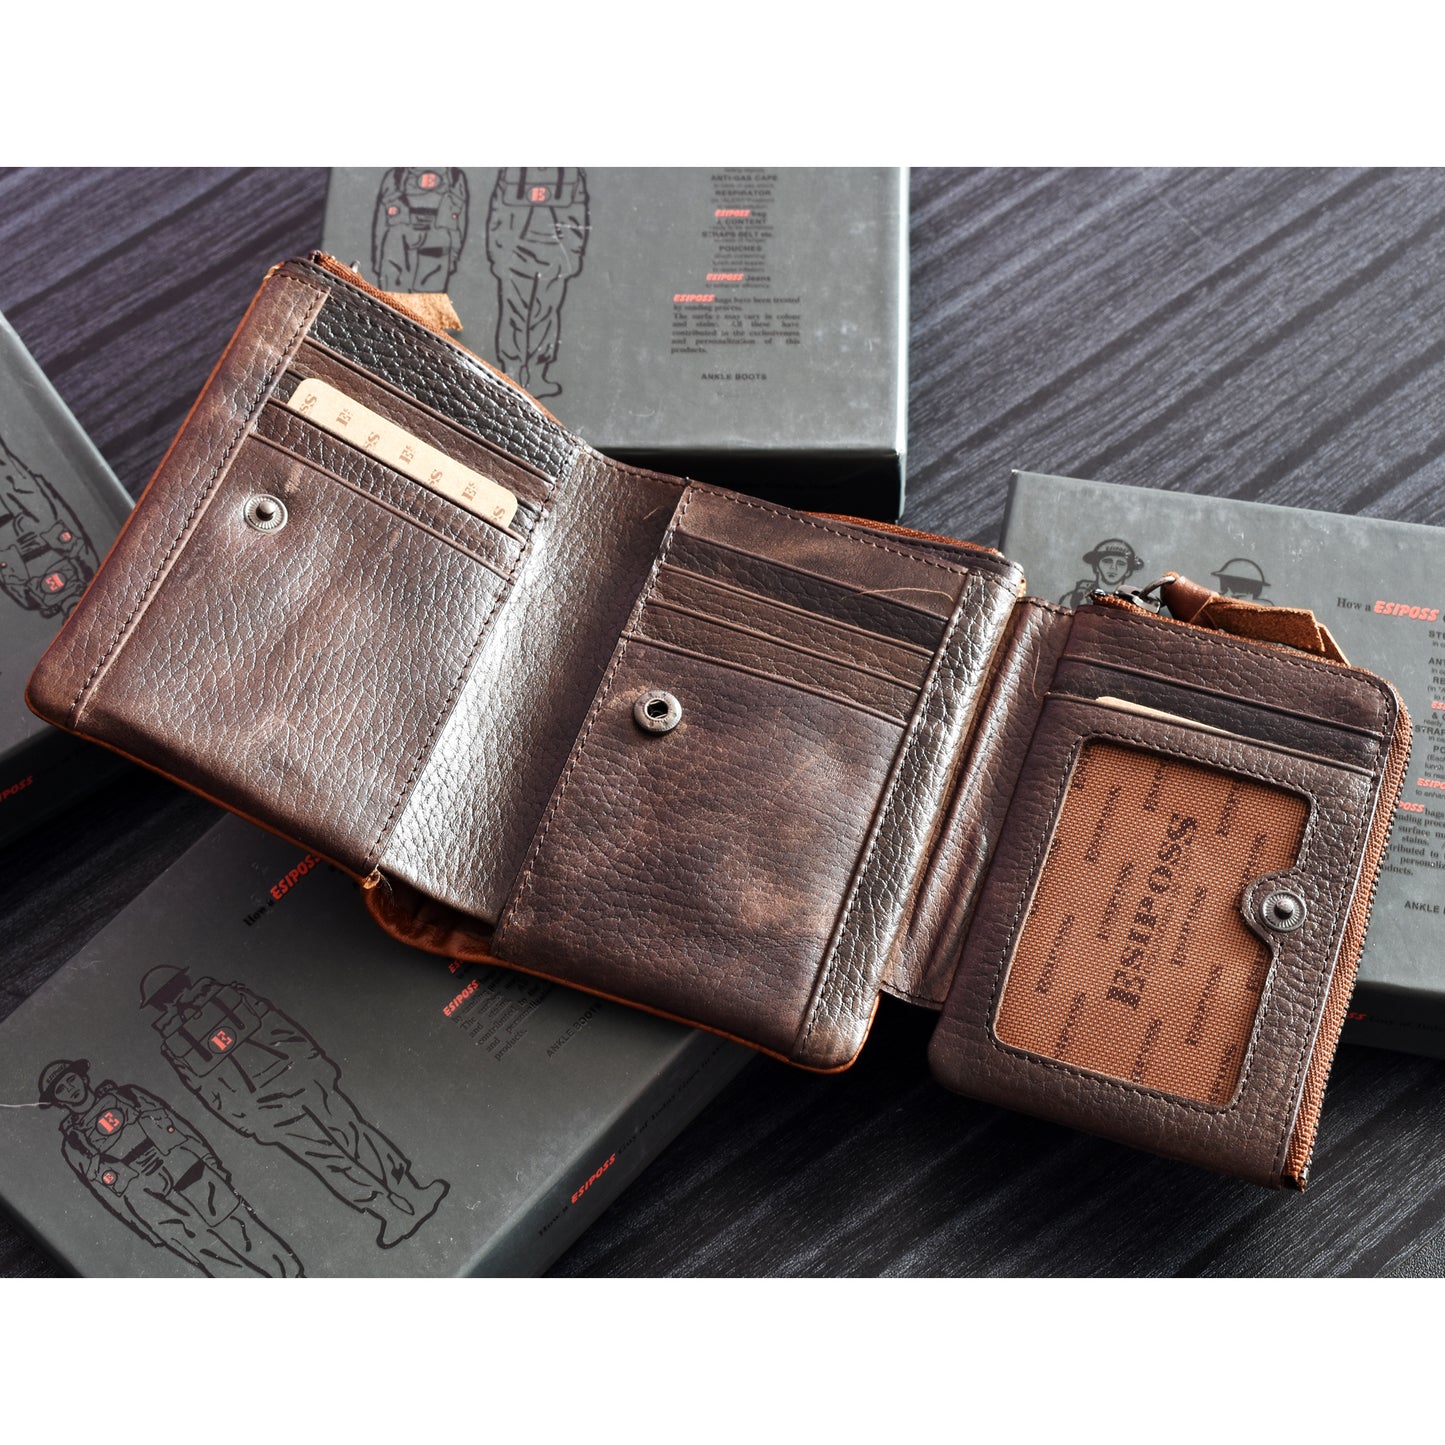 Original Esiposs Leather Wallet | Pocket Size Wallet | EPS 41